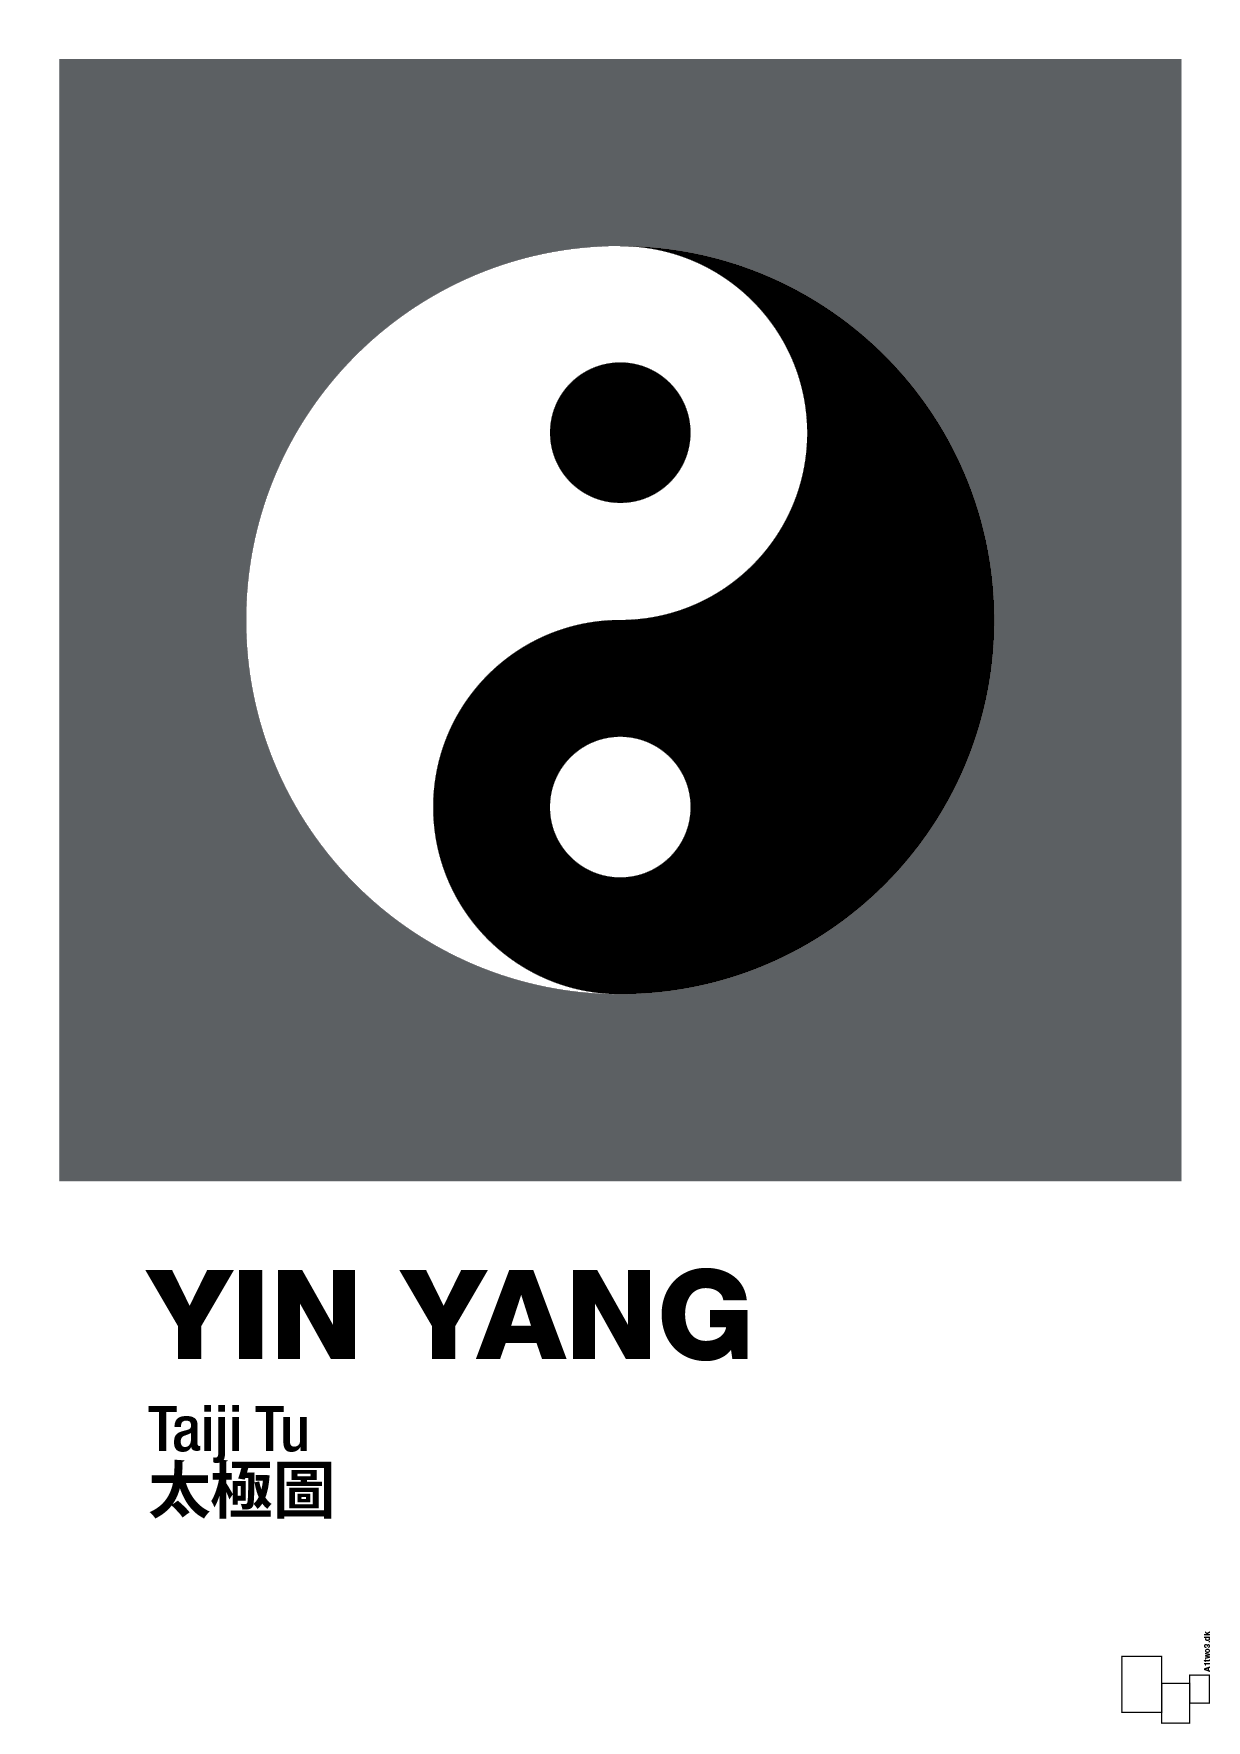 yin yang - Plakat med Videnskab i Graphic Charcoal